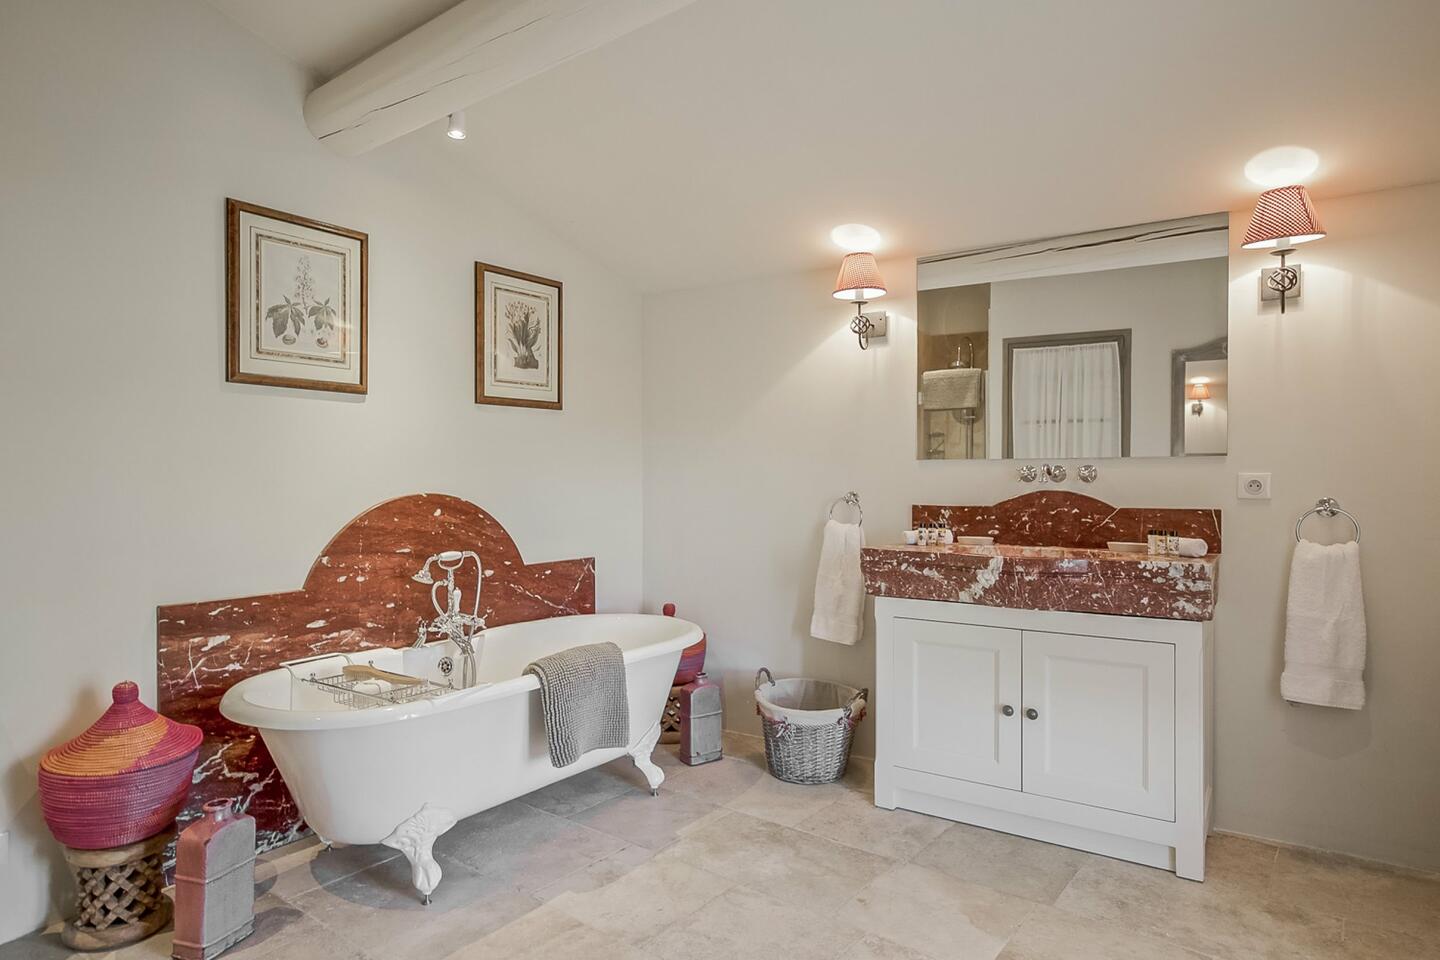 51 - Chez Émile: Villa: Bathroom